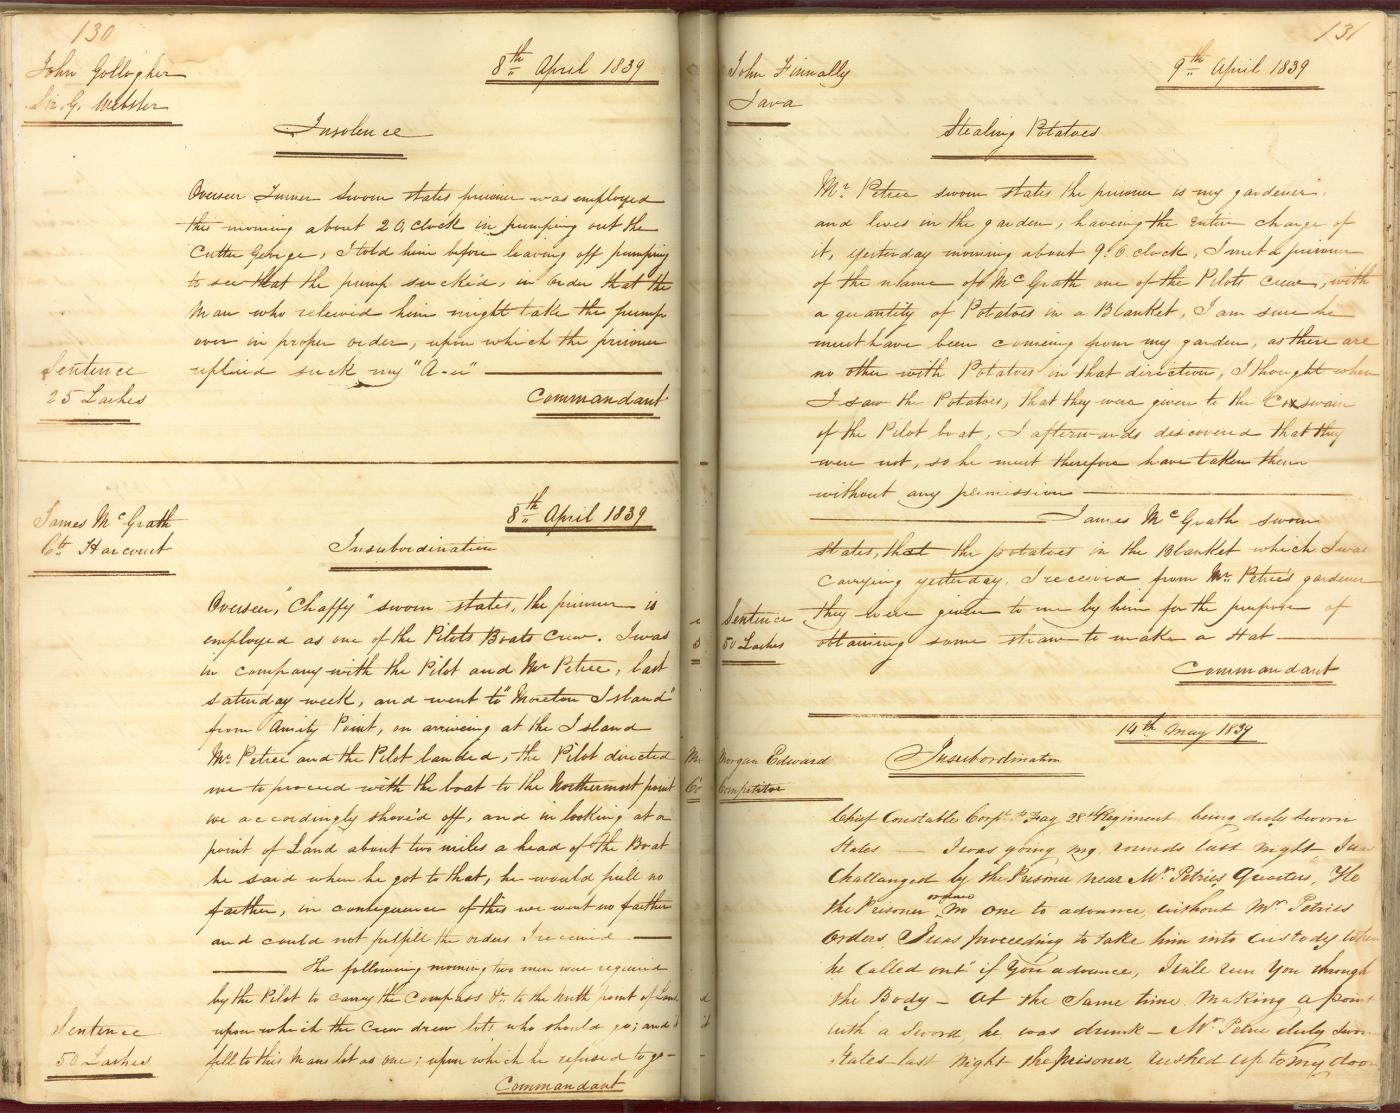 Convict Book of Trials (1835 - 1842), (Top 150: #6)